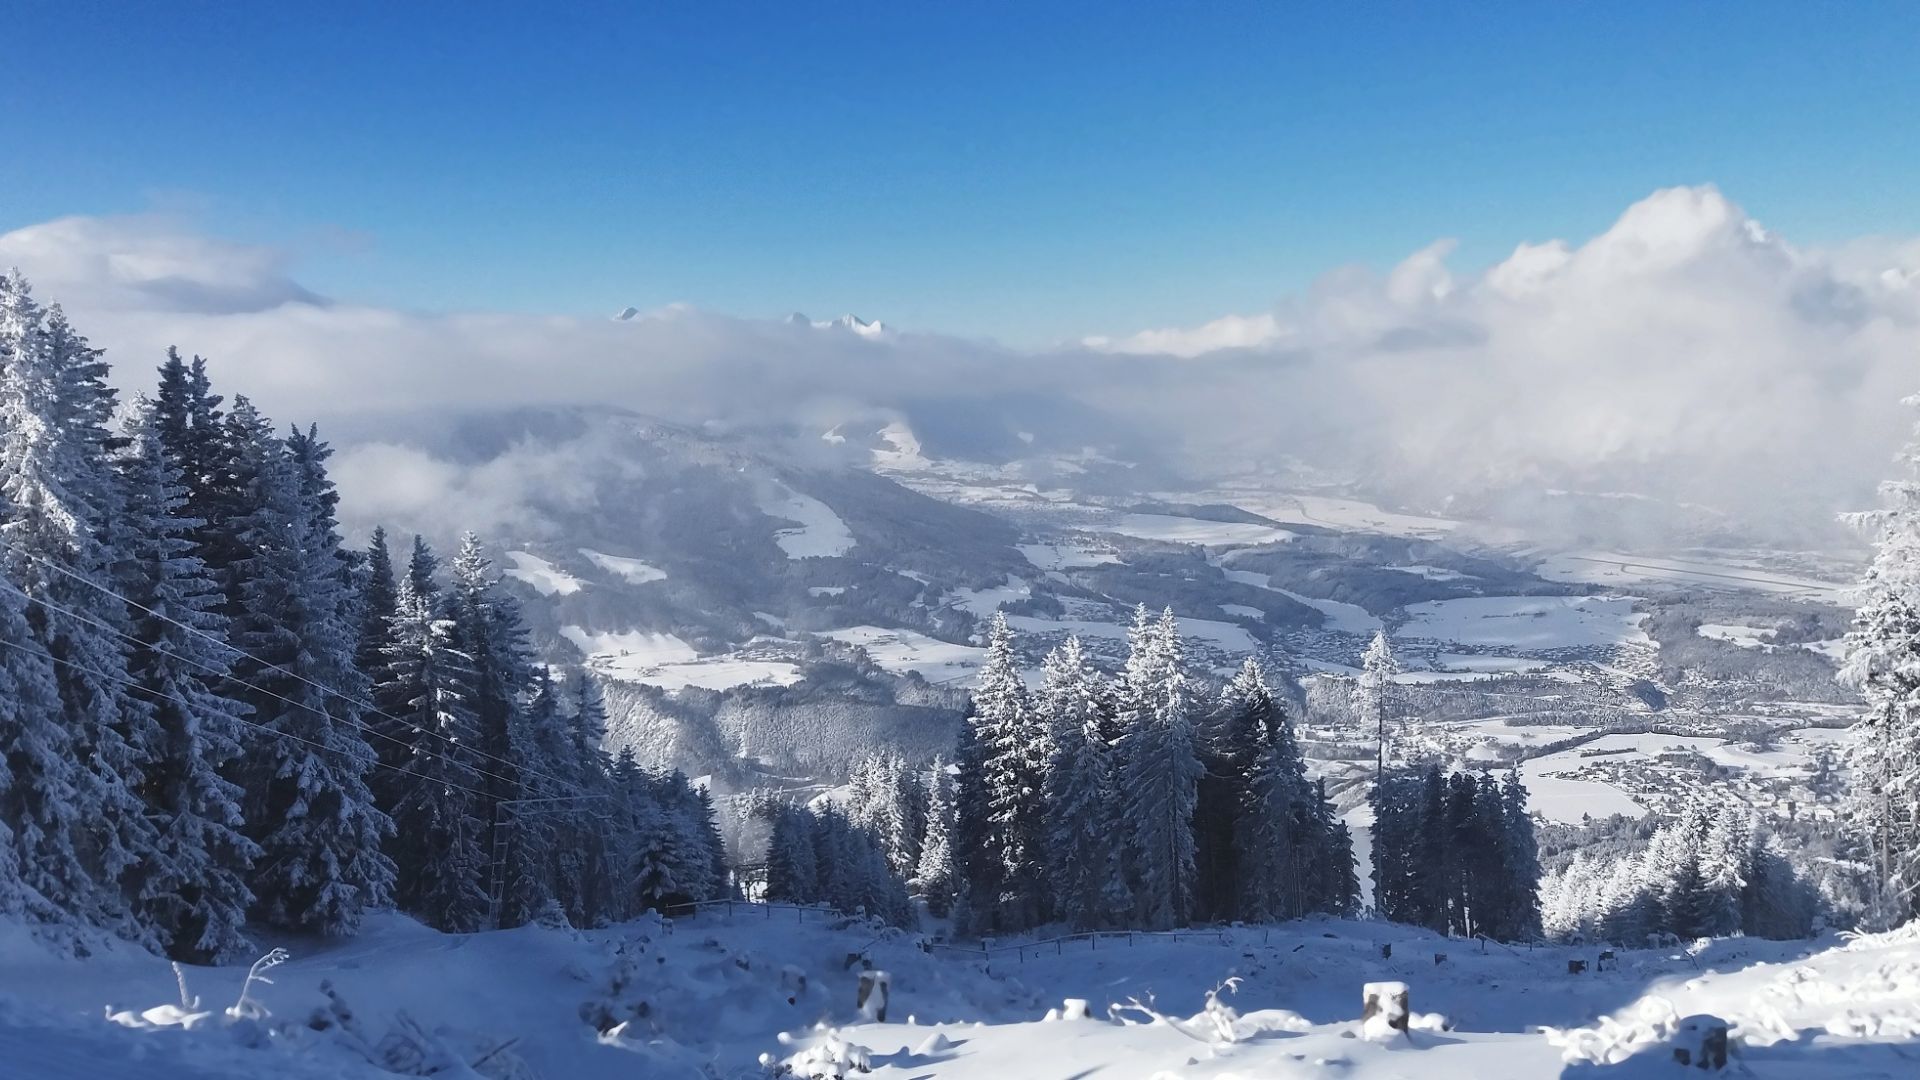 Desktop Wallpaper Igls Ski, Skiing, Snow Alps, Mountains, Winter, Nature, Hd  Image, Picture, Background, Hzg876